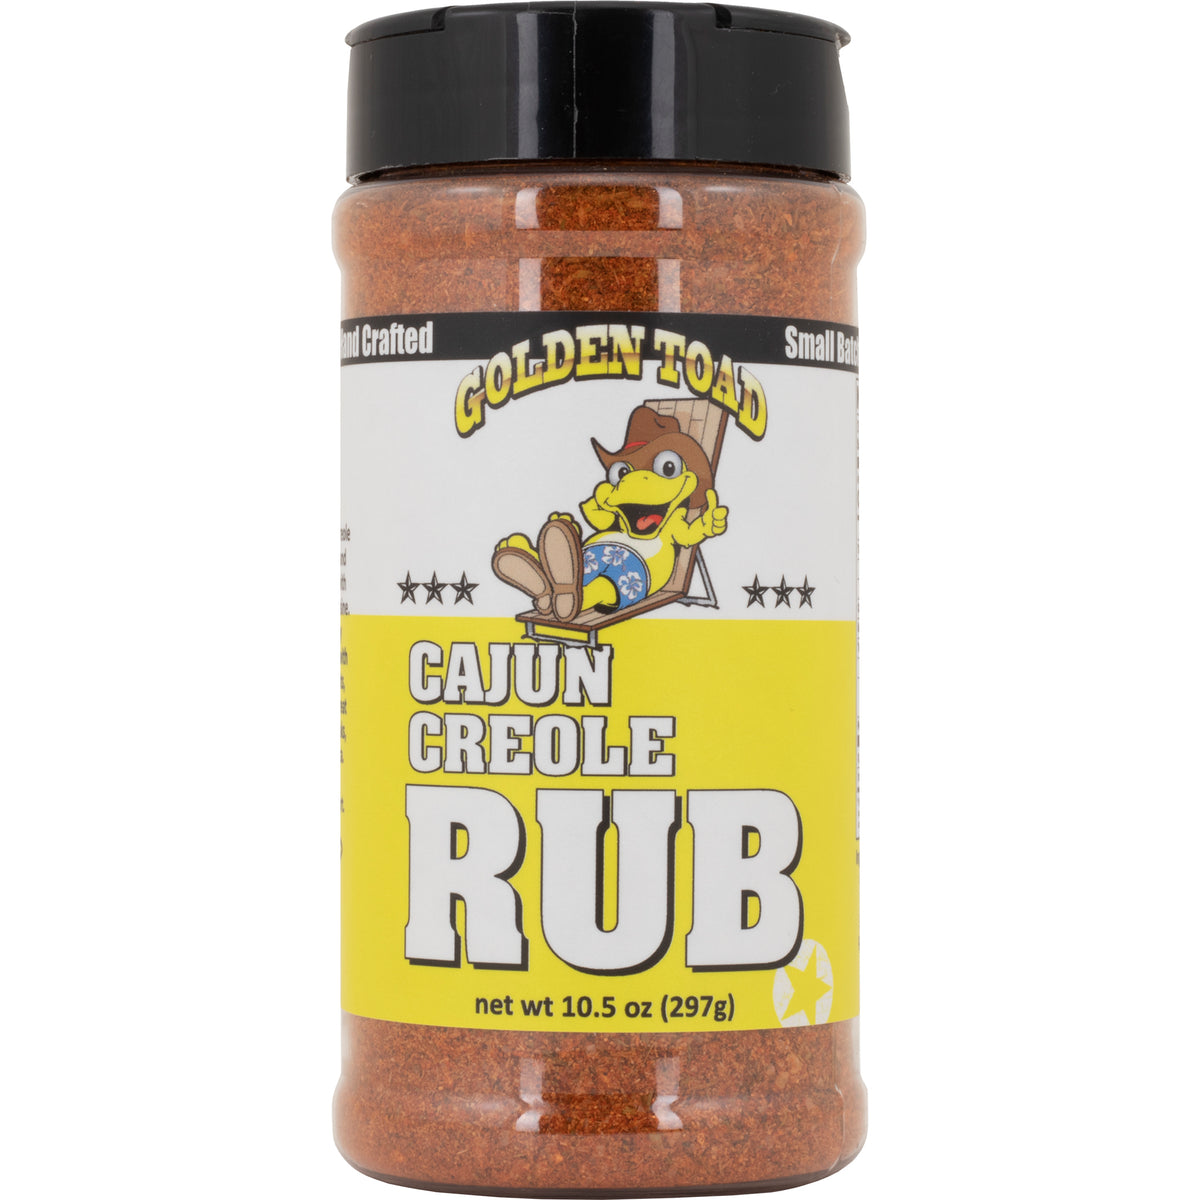 Golden Toad Cajun Creole Rub